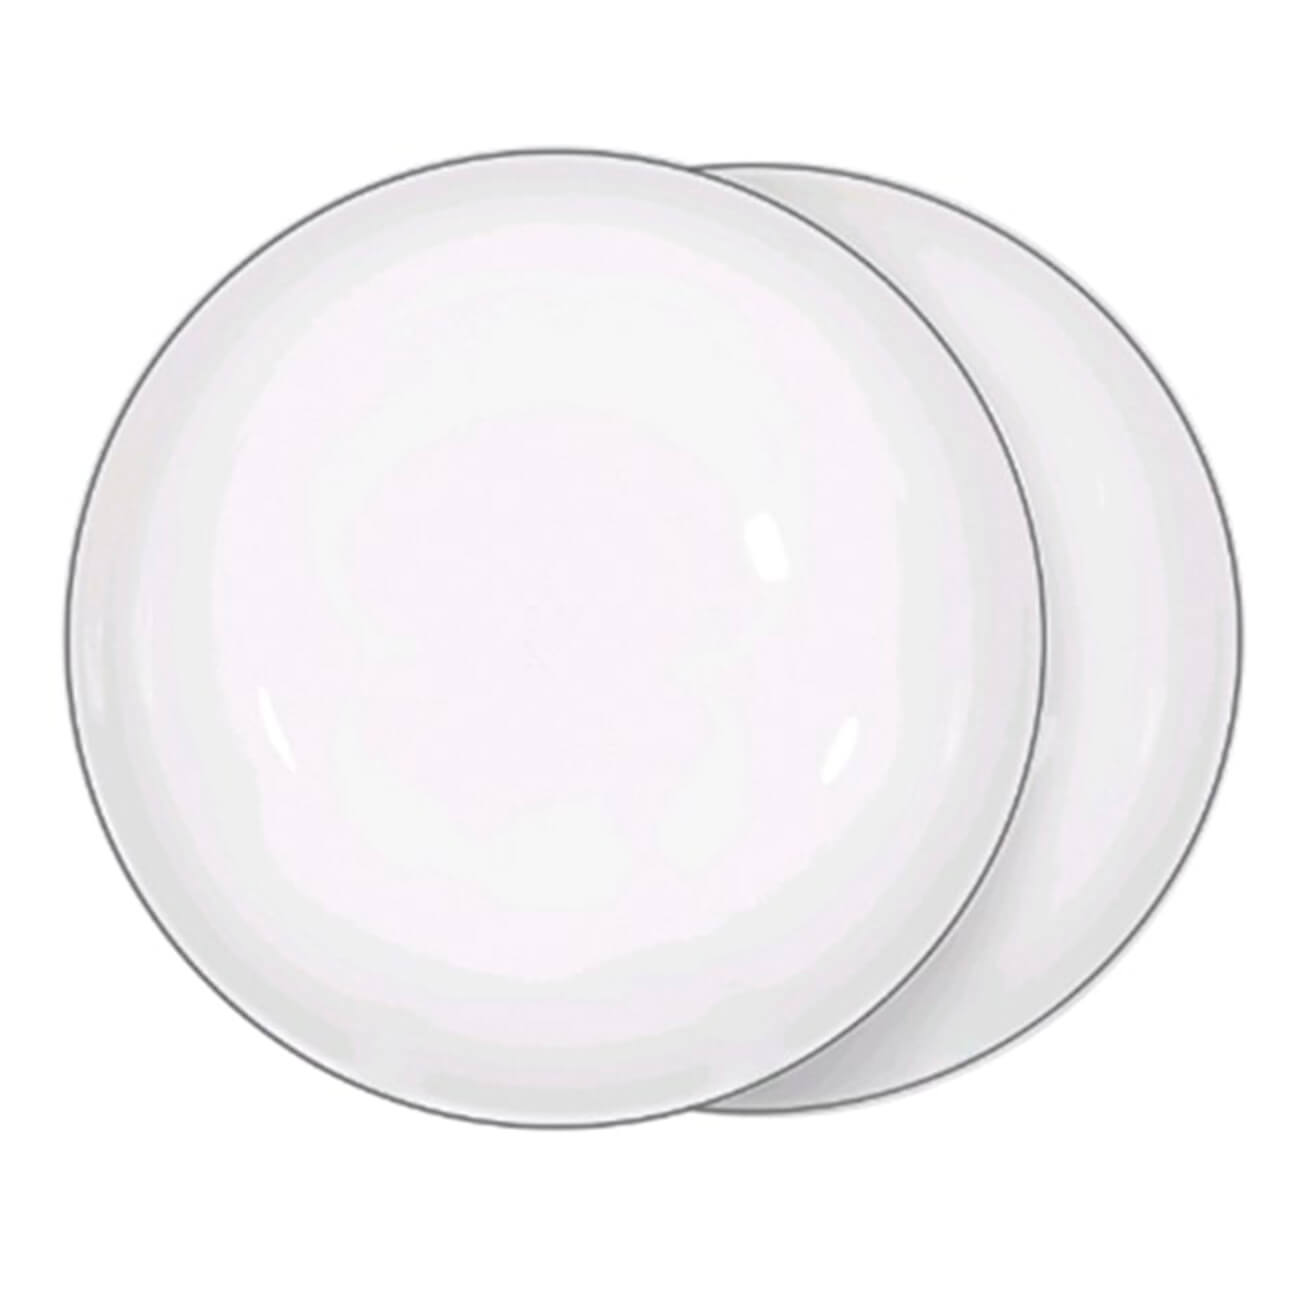 Тарелка суповая, 20х5 см, 2 шт, фарфор F, белая, Ideal silver тарелка суповая 21х4 см фарфор f белая bend silver